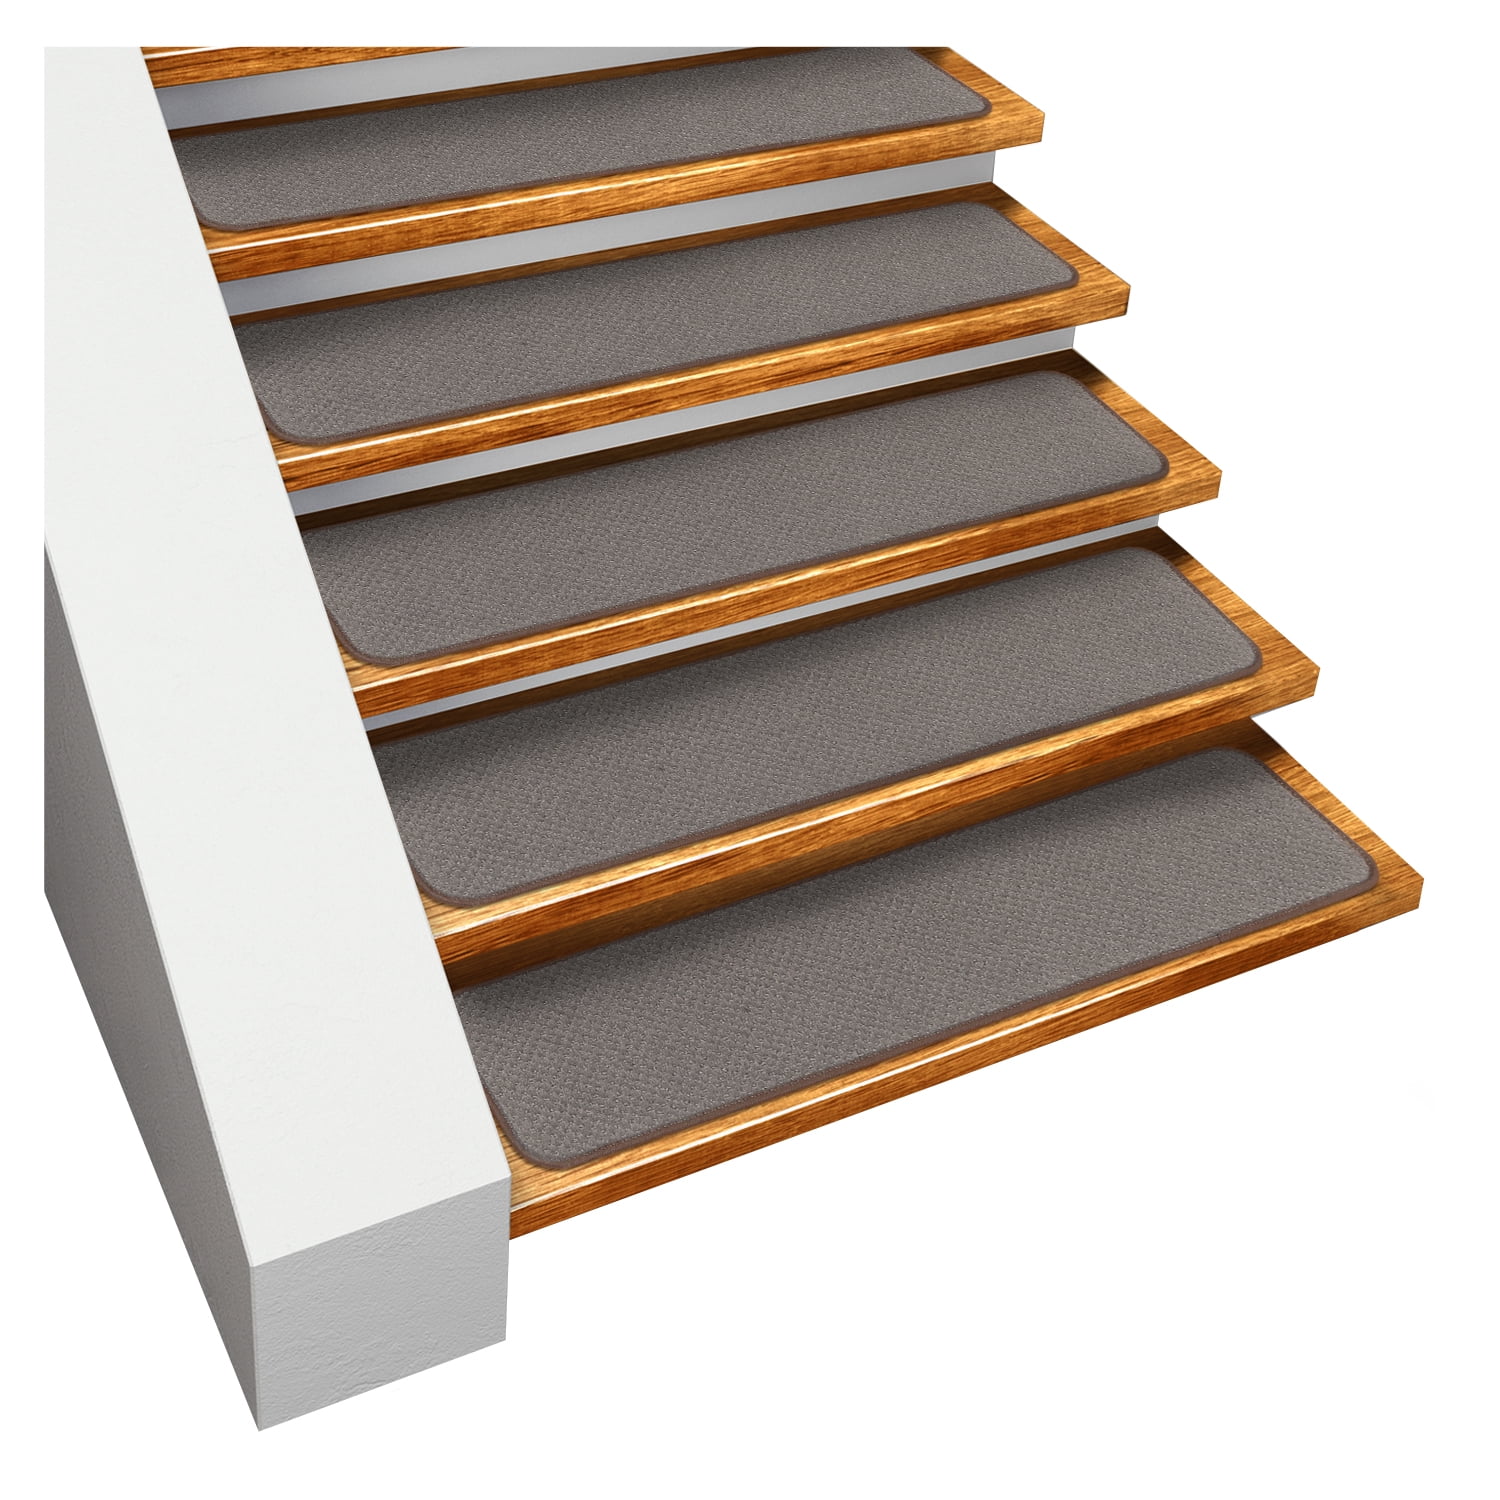 Stair Treads Skid Slip Resistant Backing Indoor Carpet Stair Treads Trellis Border Design 9 inch x 36 inch Set of 13, Grey Black 